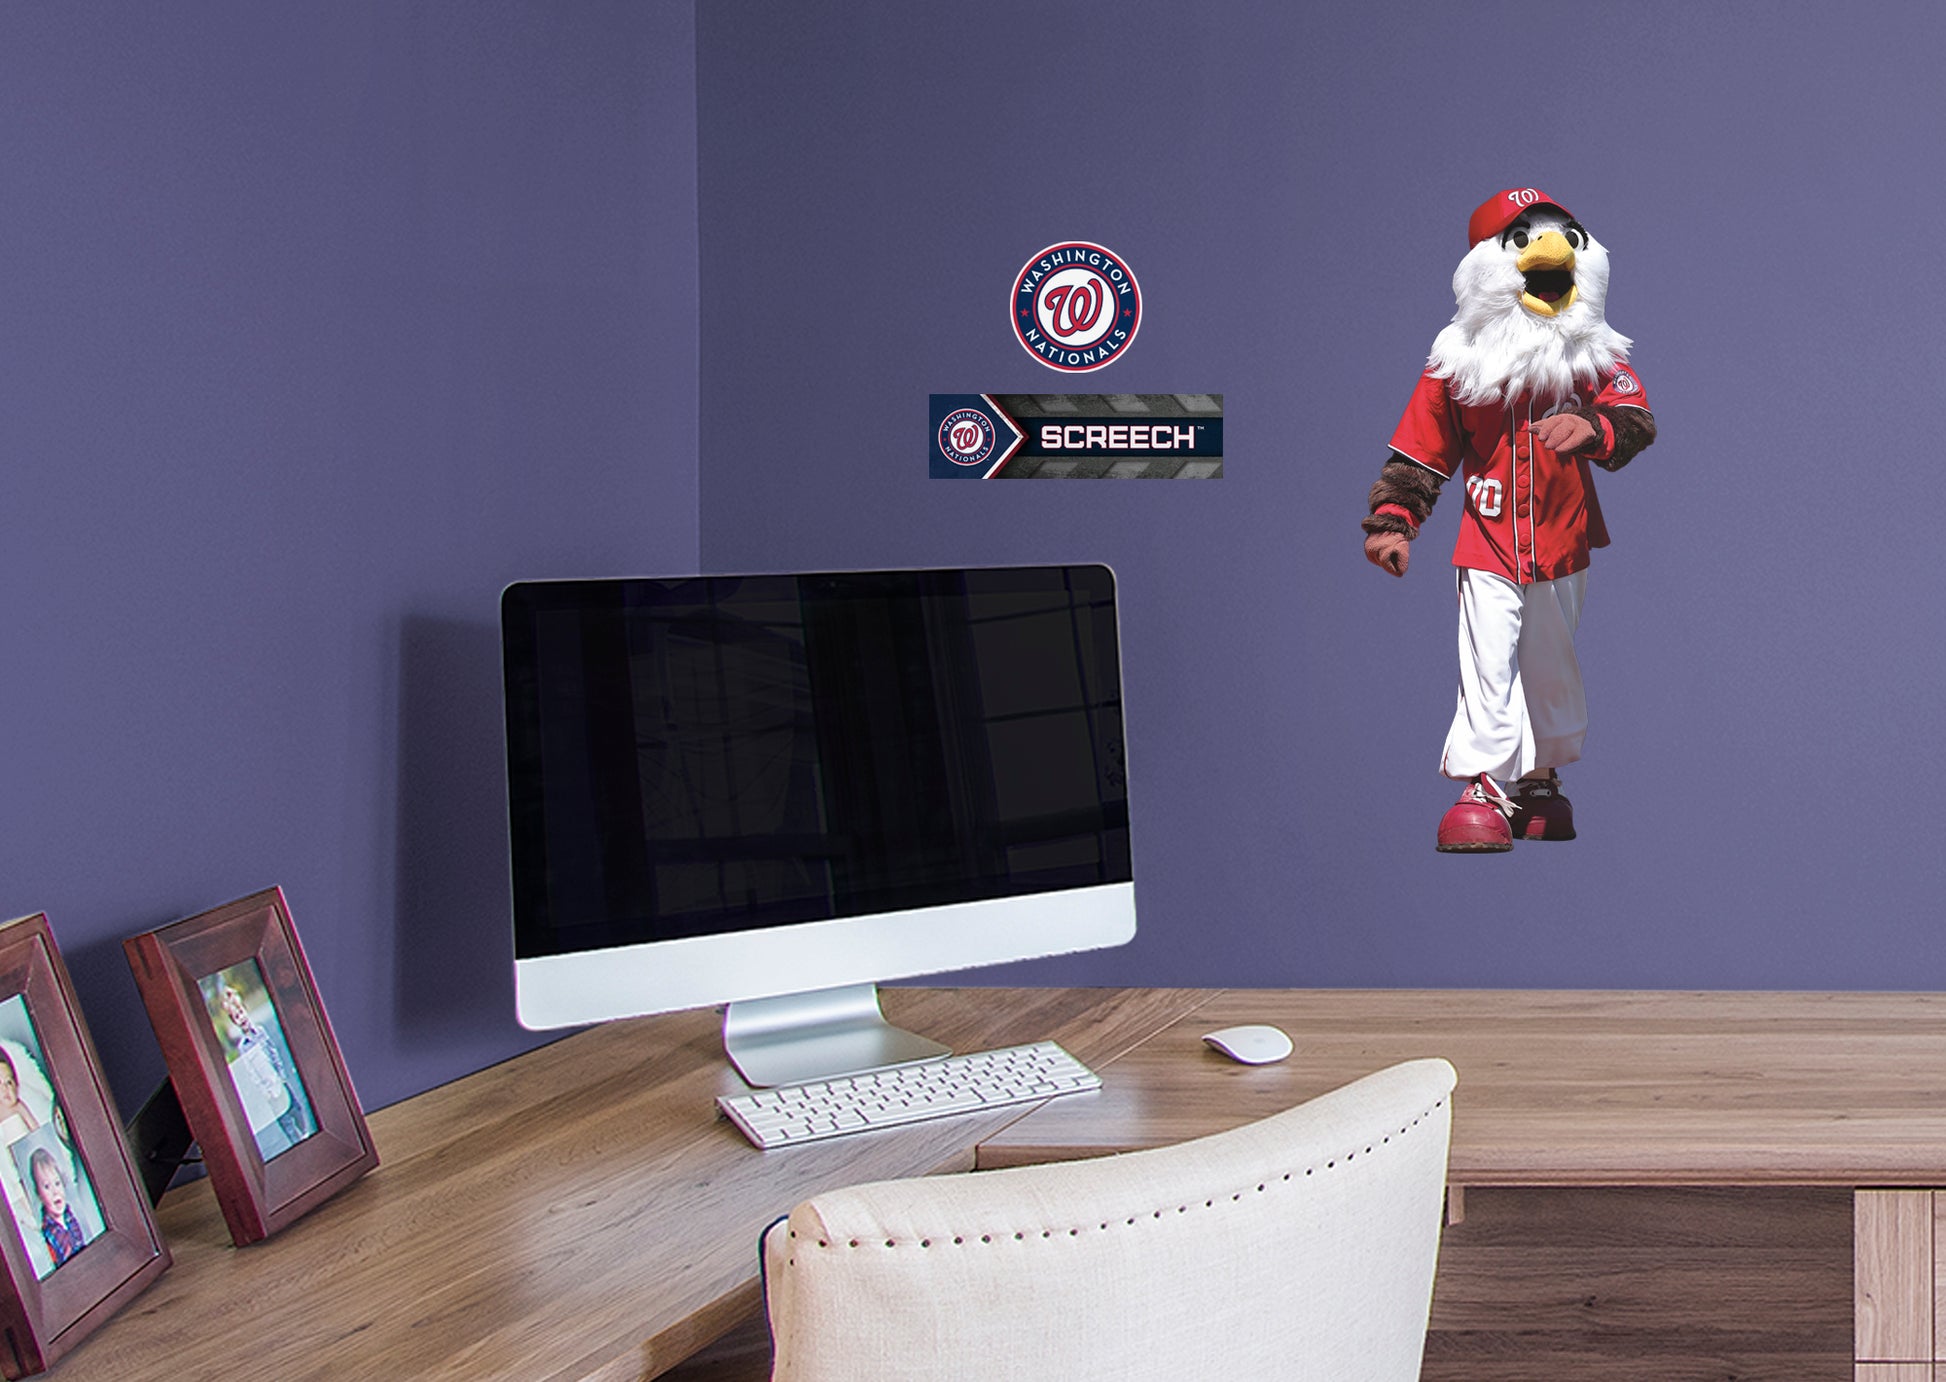 Washington Nationals unveil a new look for mascot 'Screech' Washington DC,  USA - 03.03.09 Stock Photo - Alamy